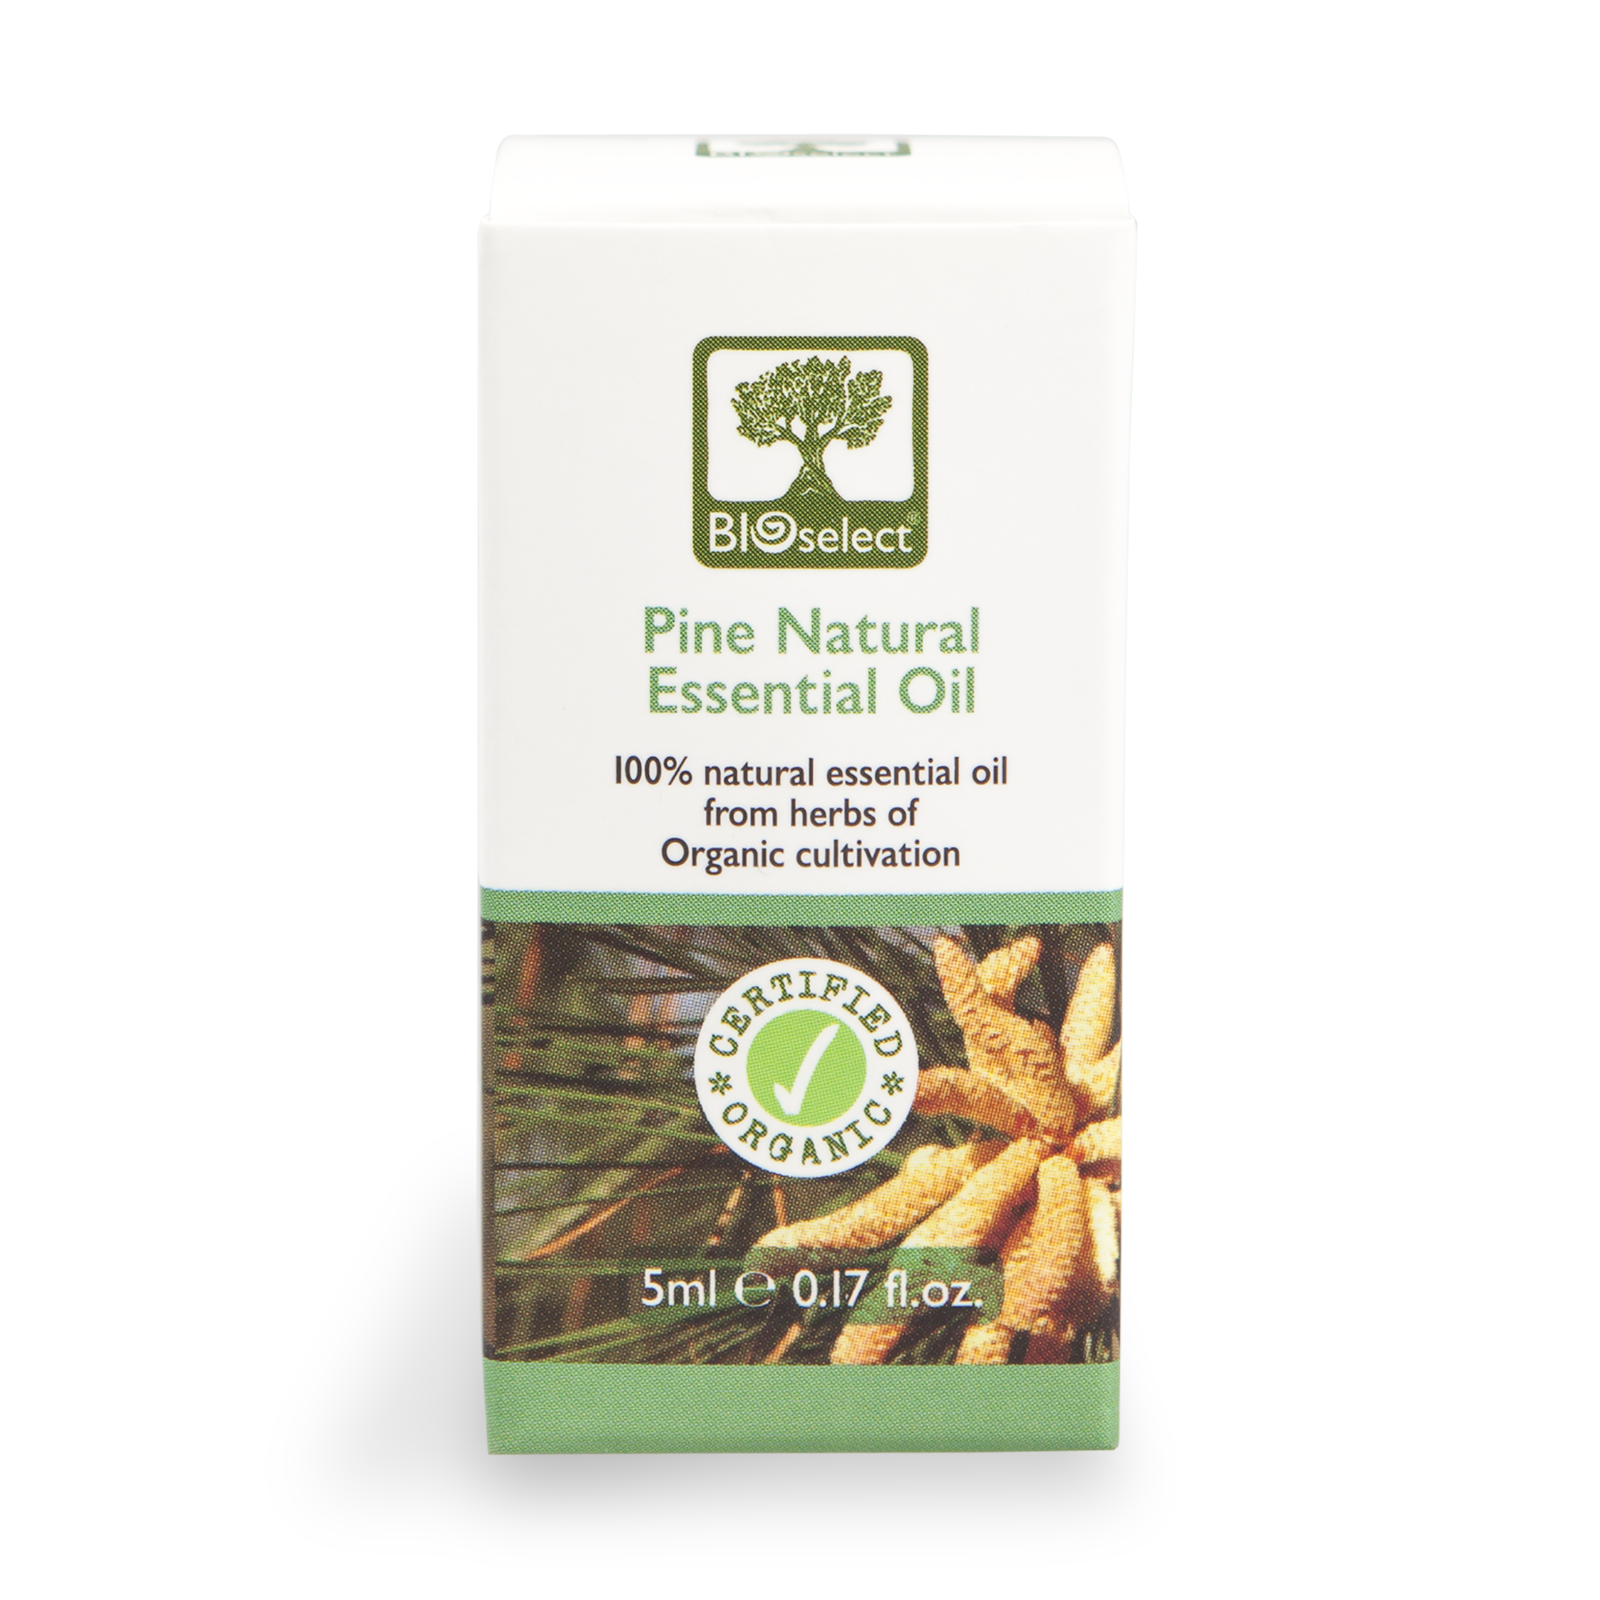 Bioselect Pine Natural Essential Oil Certified Organic